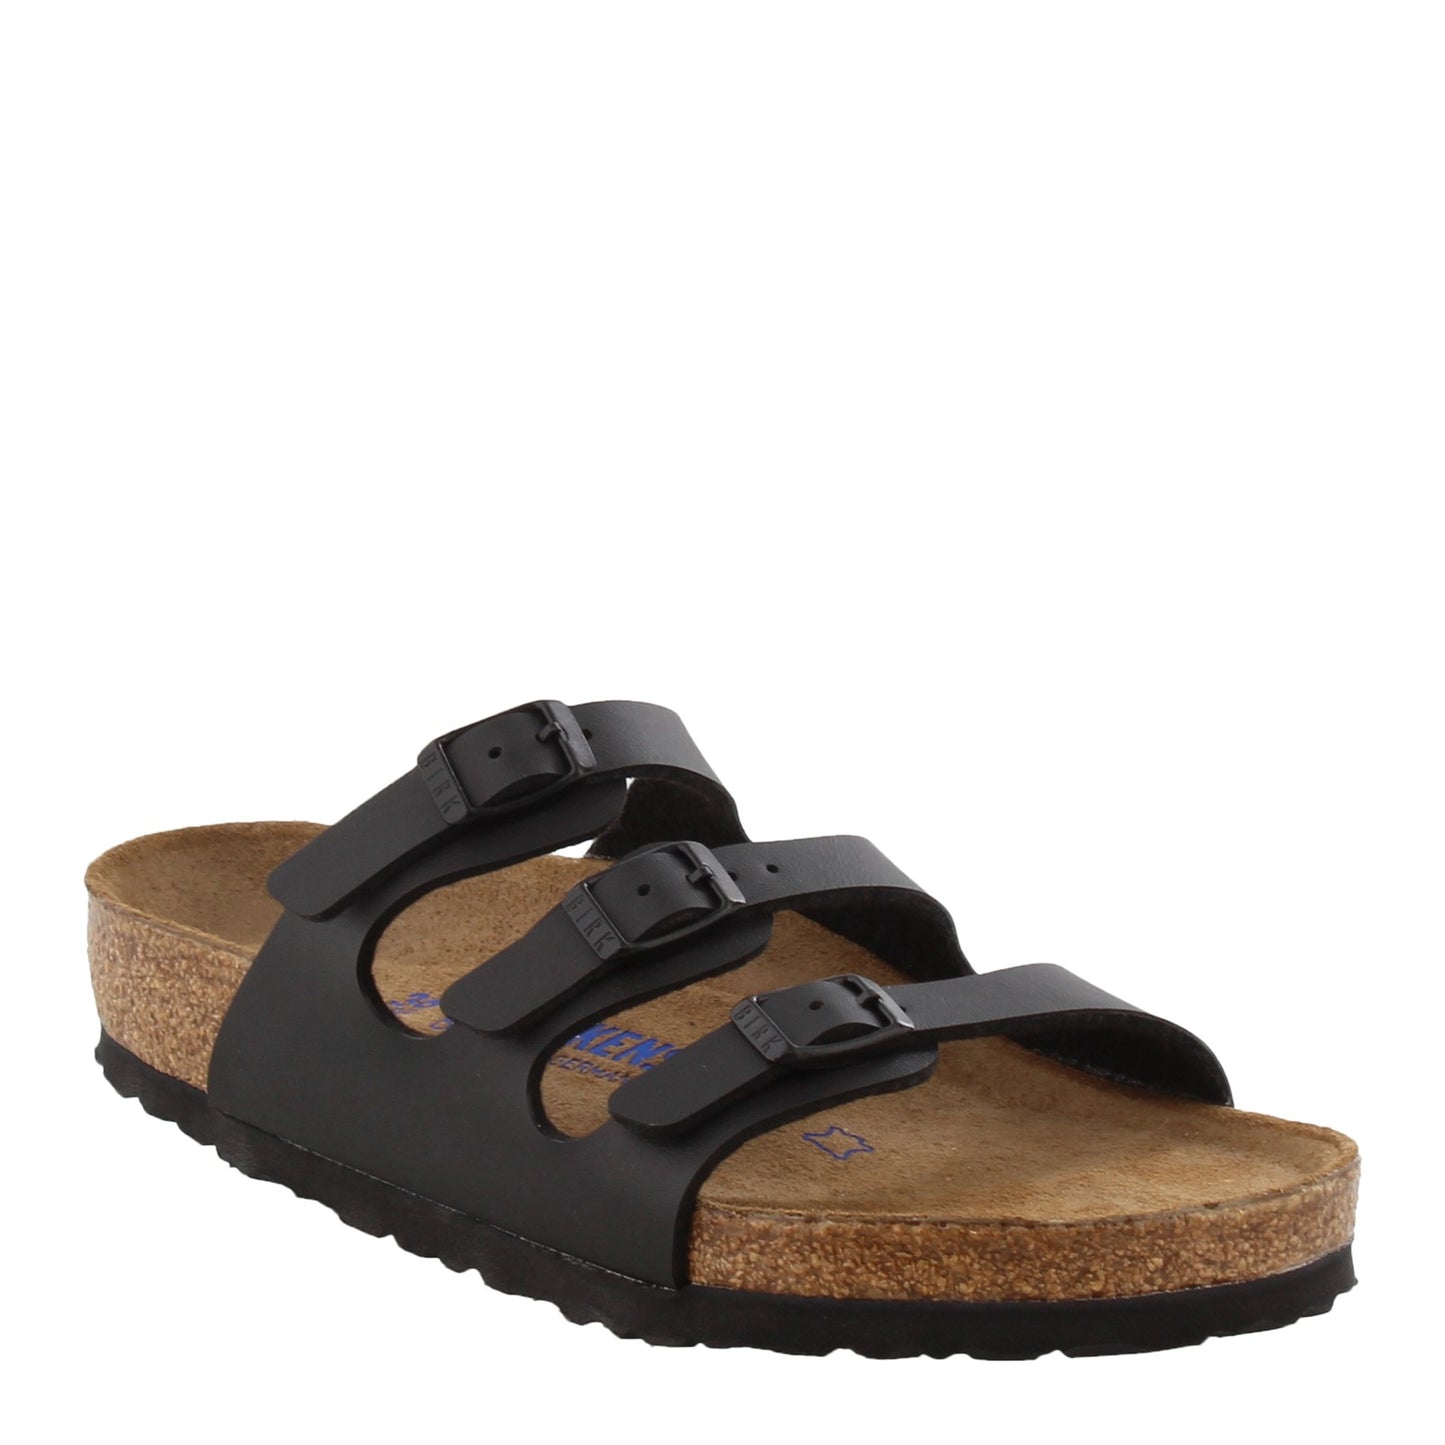 Peltz Shoes  Women's Birkenstock Florida Soft Footbed Sandal BLACK 5301 1 R